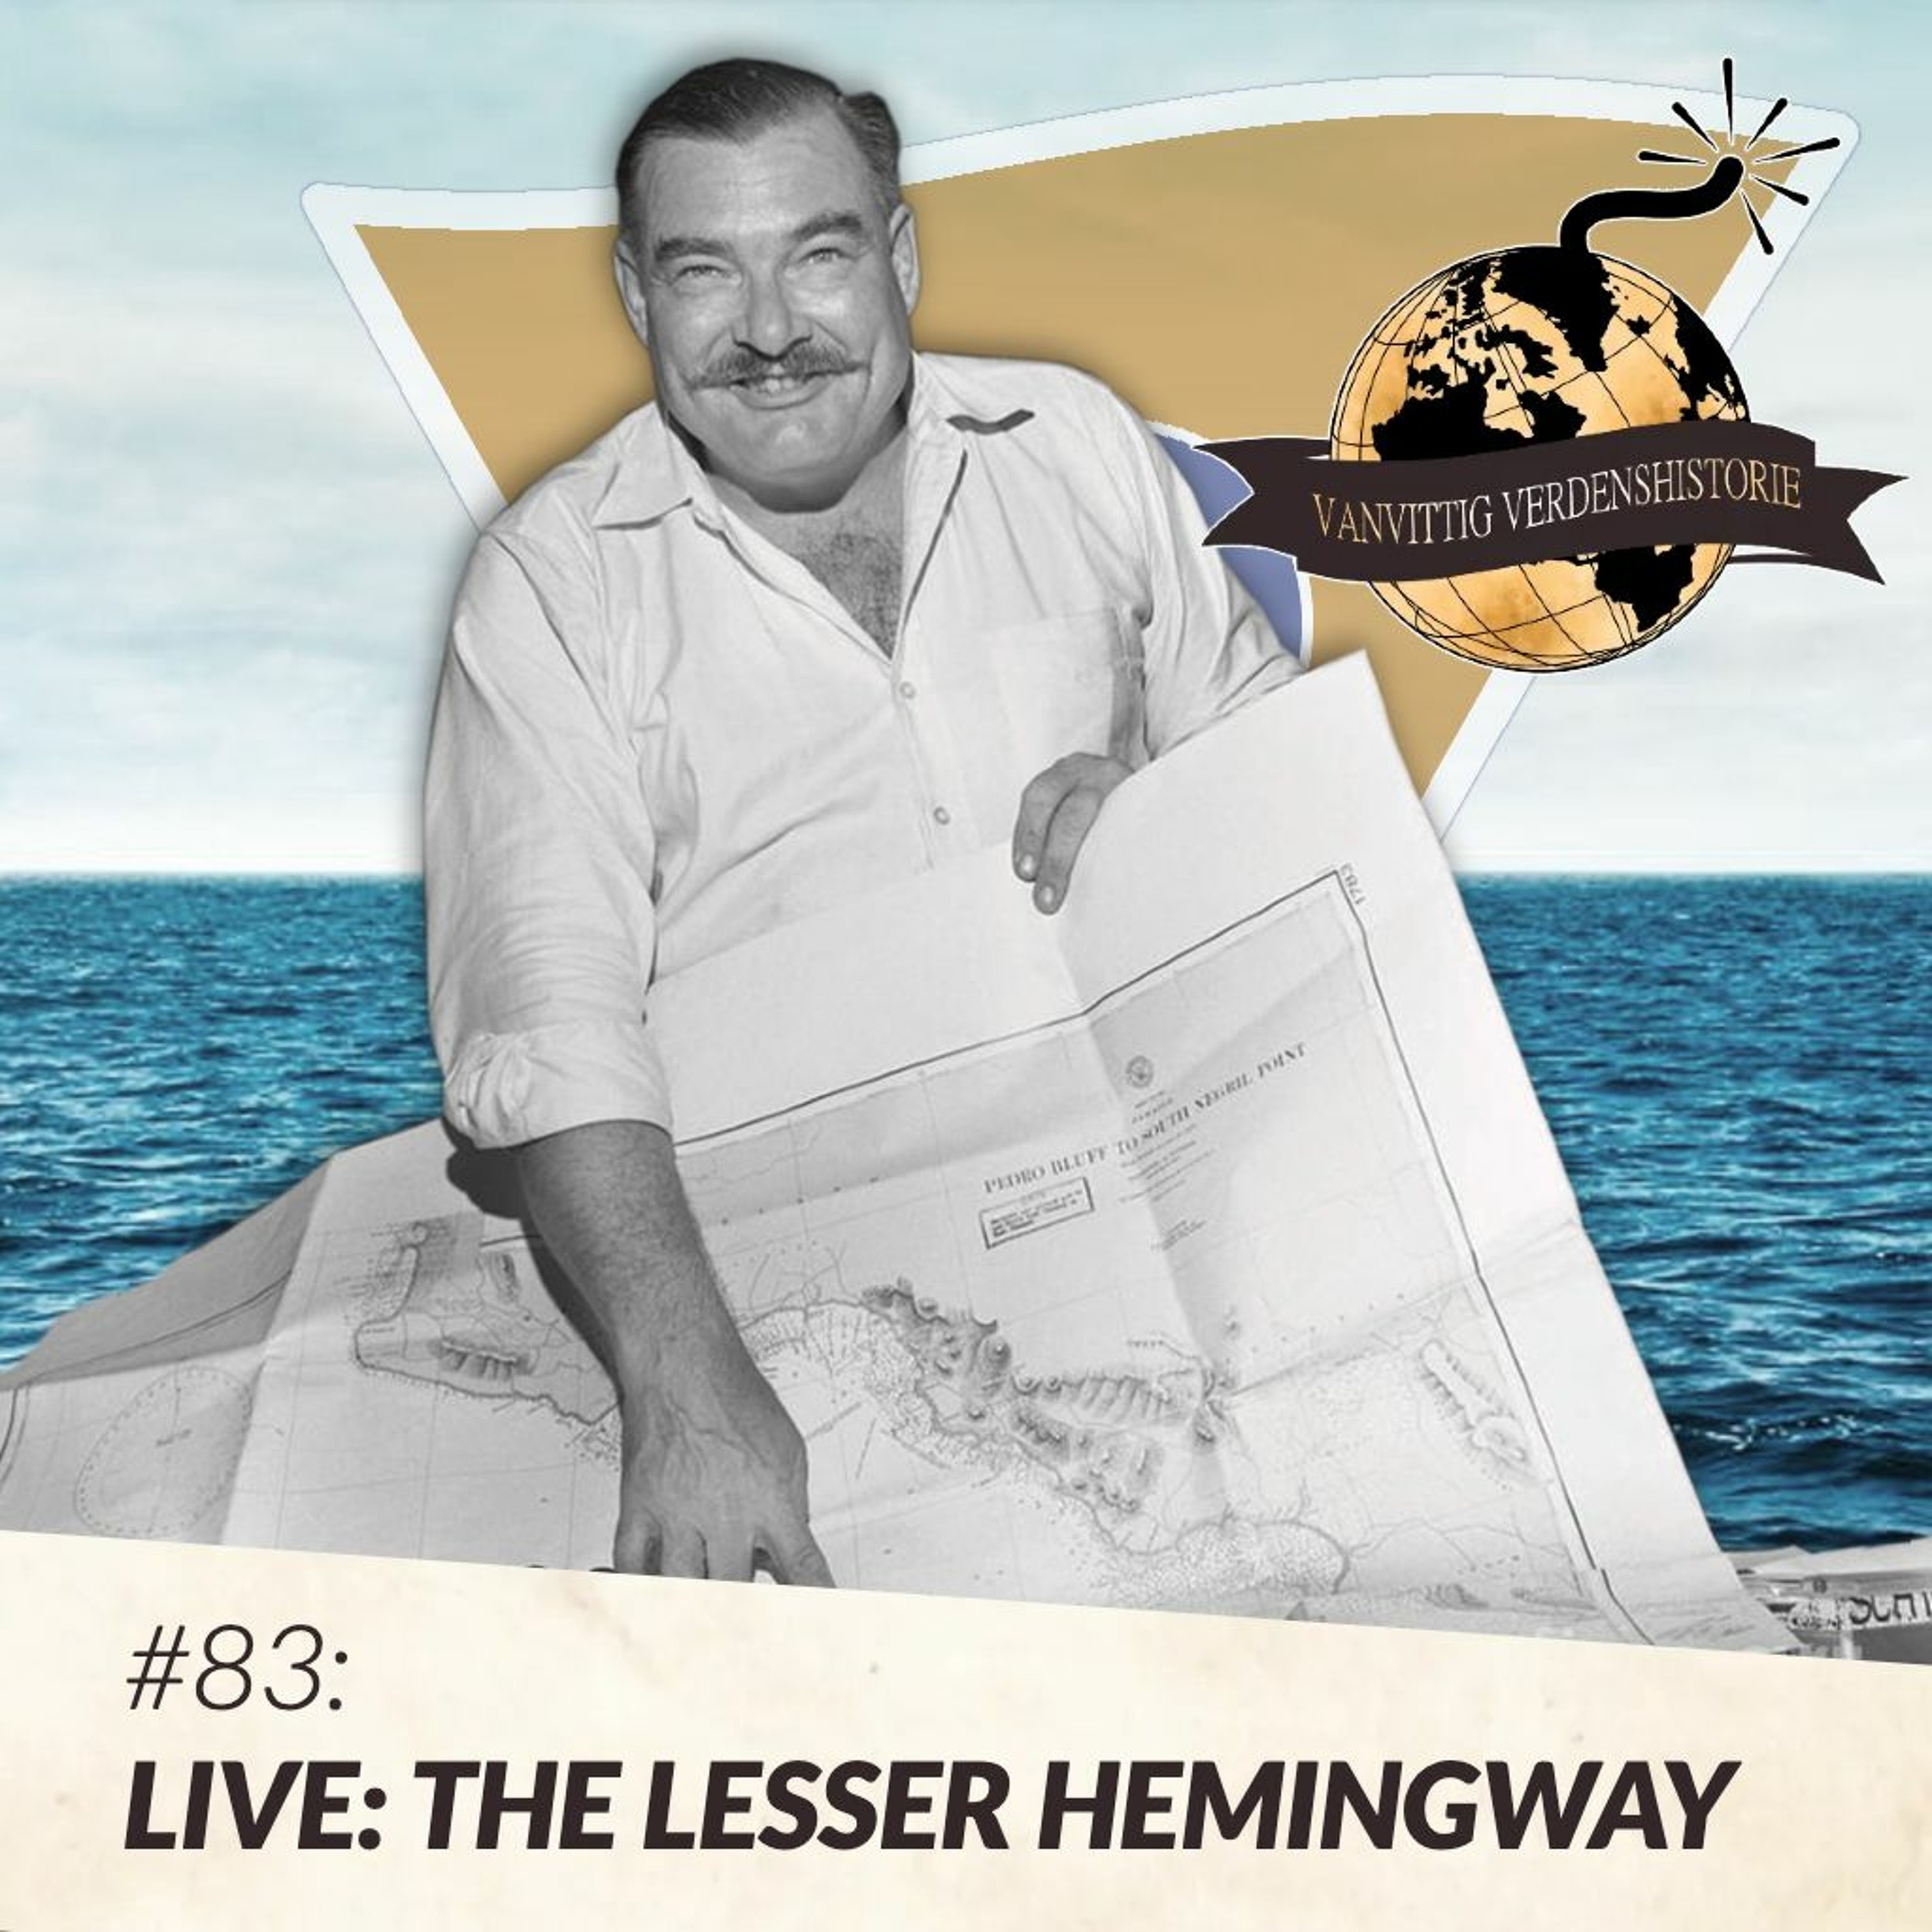 #83: LIVE: The Lesser Hemingway